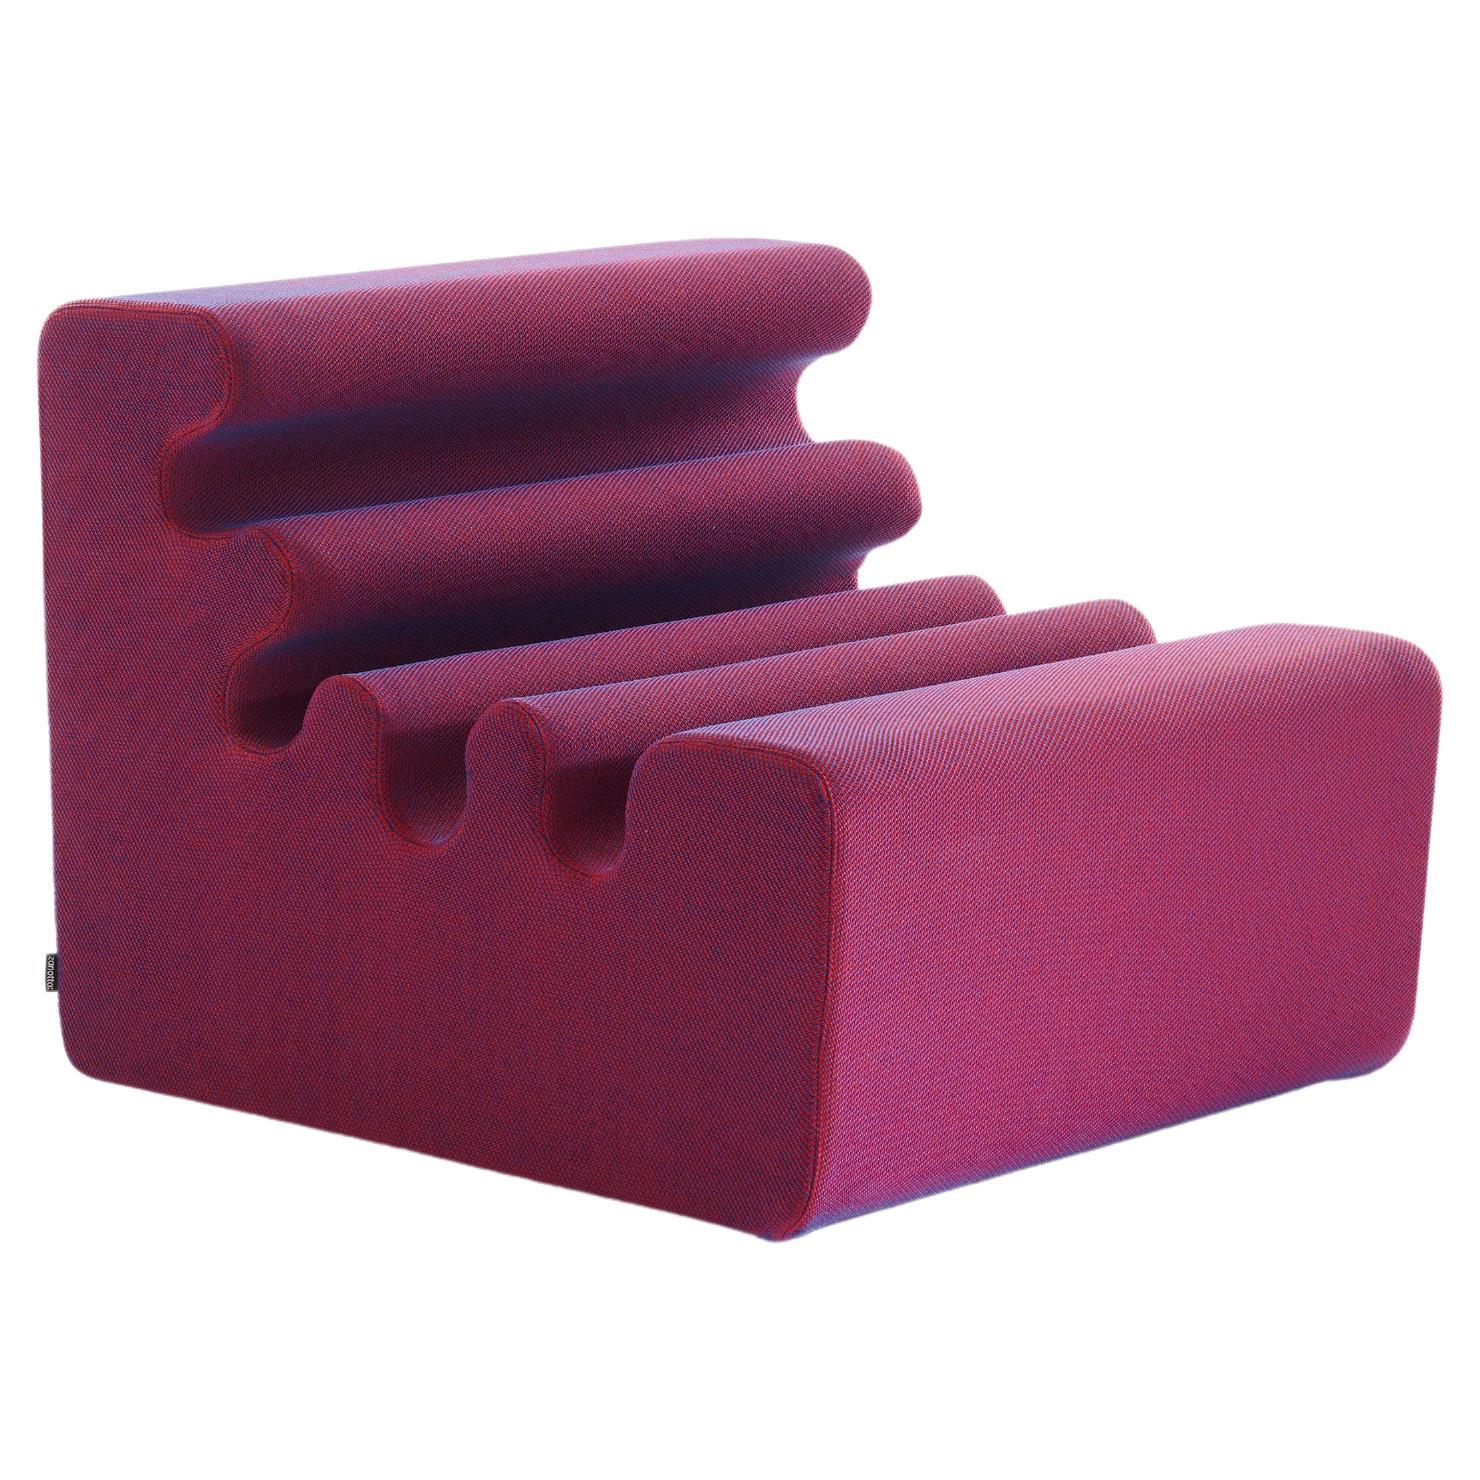 Customizable Karelia Lounge Chair by Liisi Beckmann For Sale